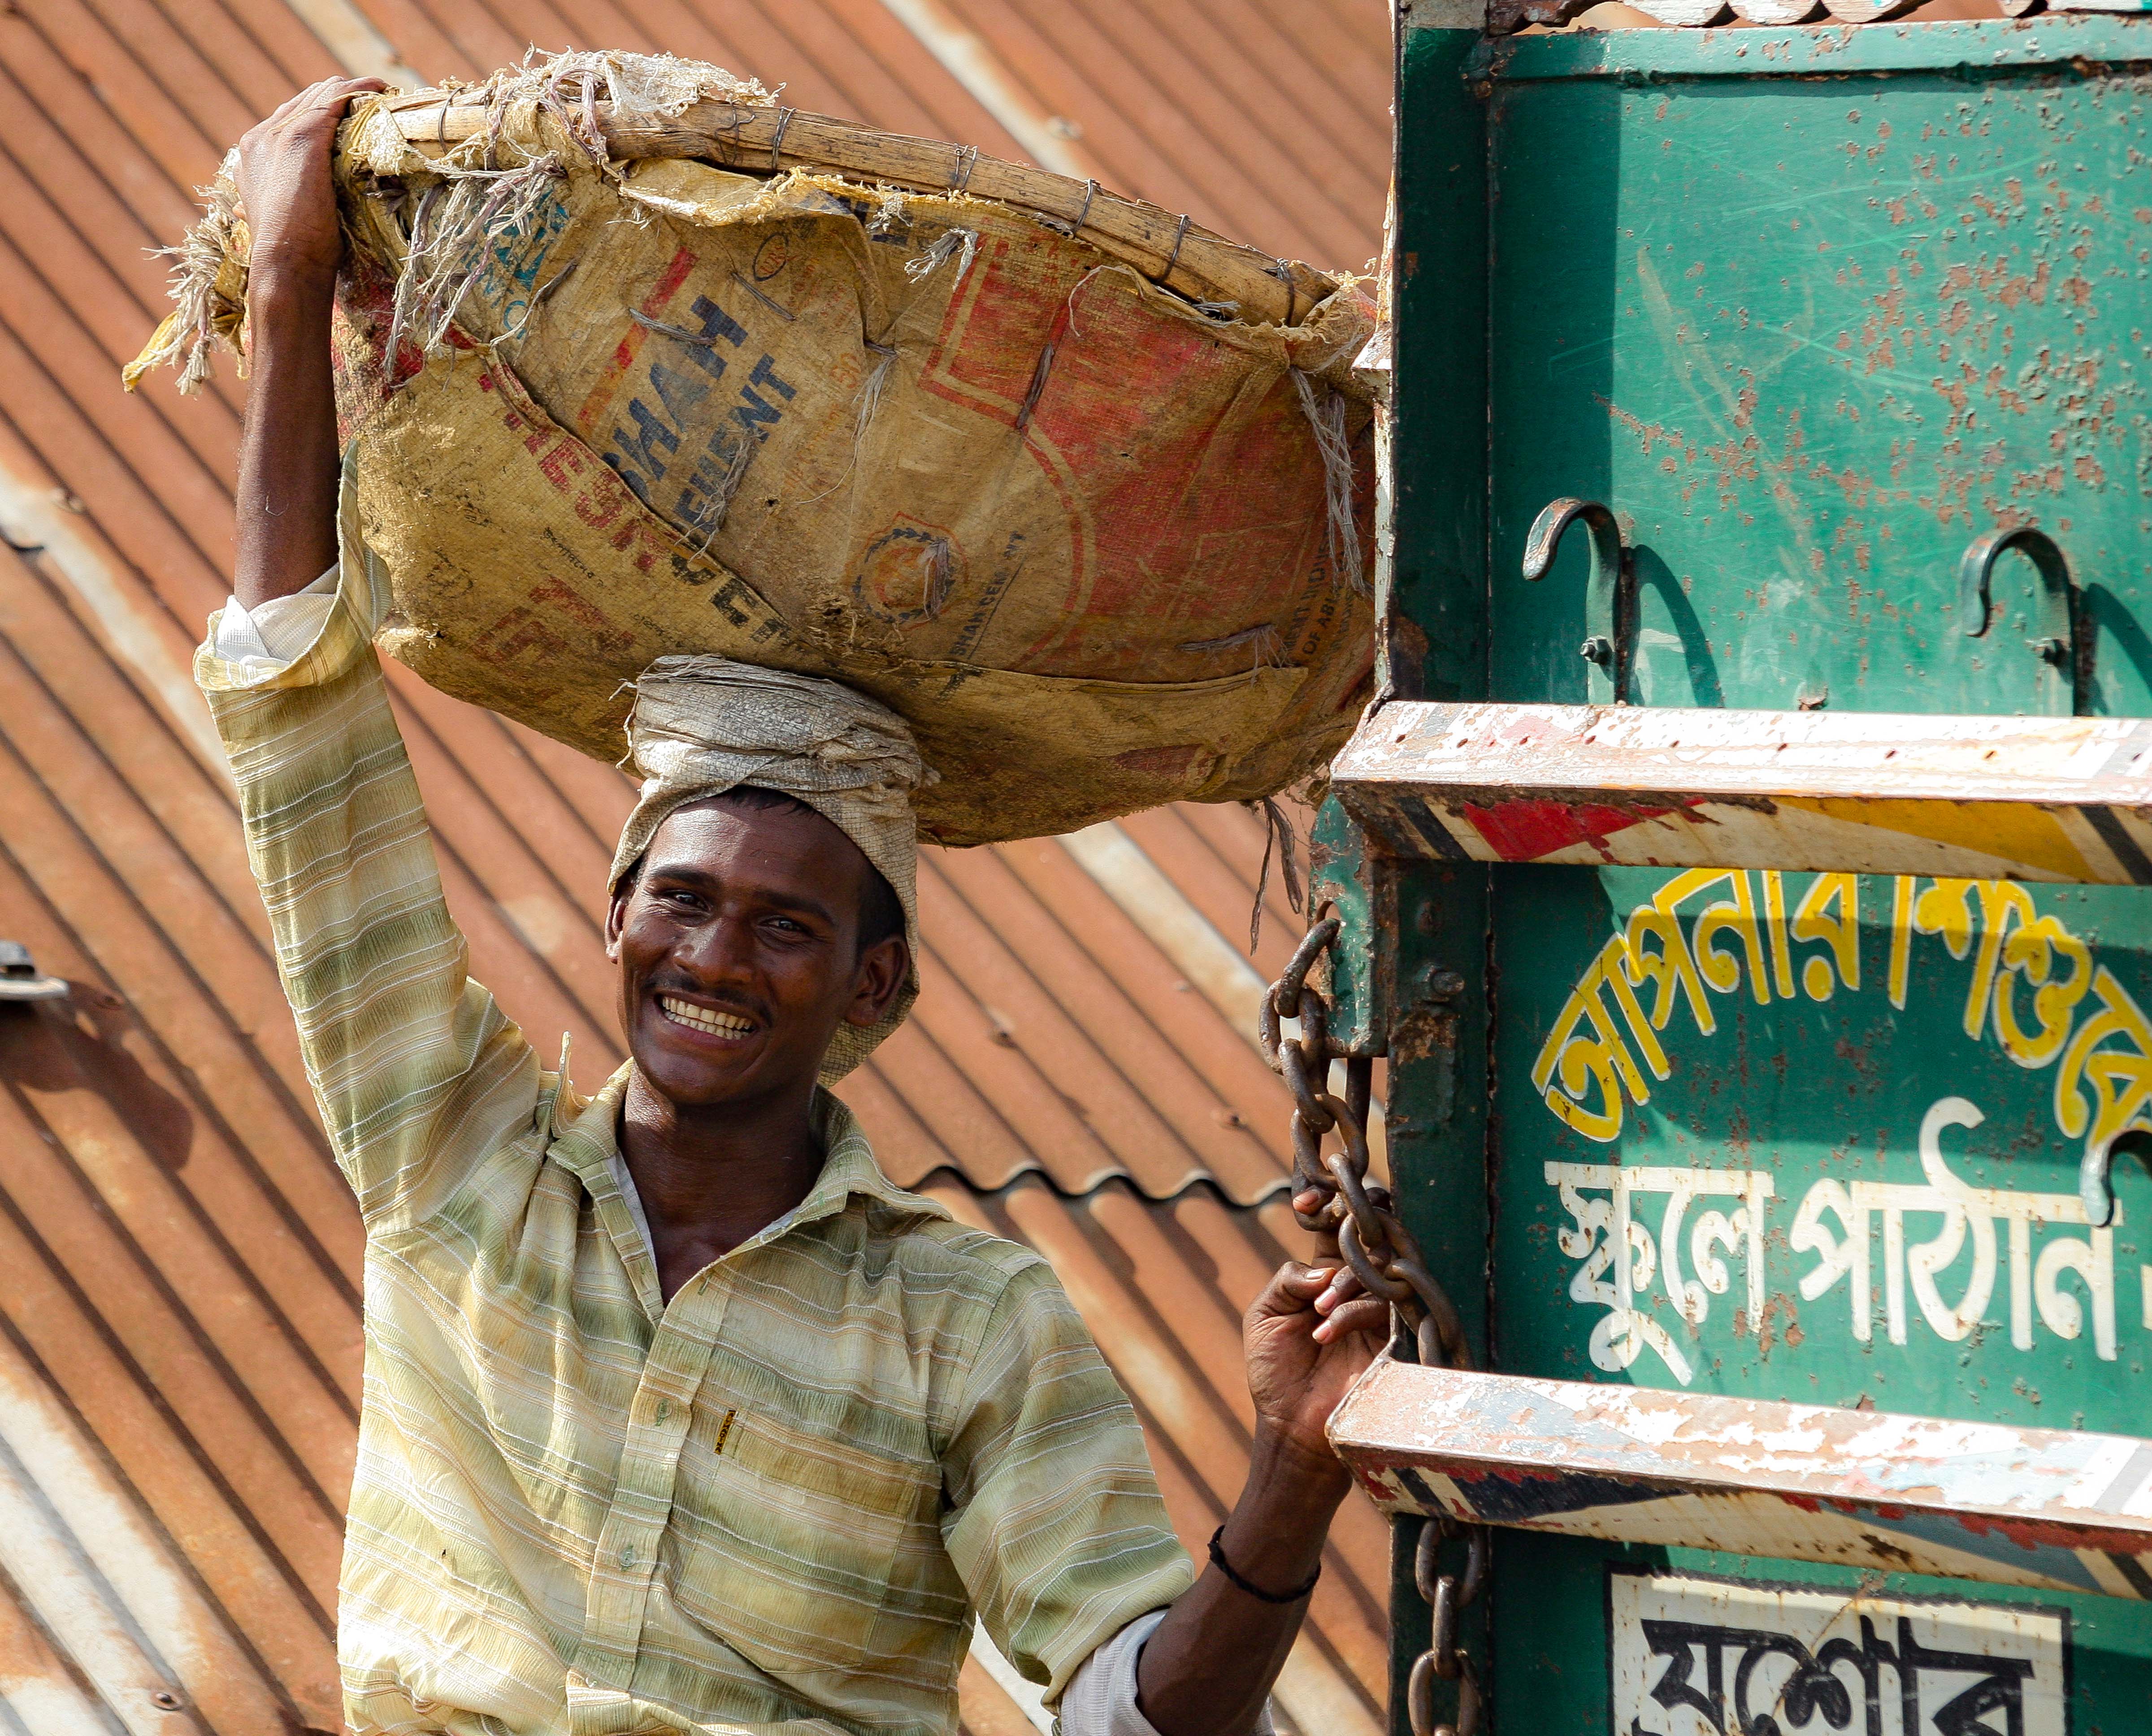 Bangladesh, Gazipur Prov, Street Vendor, 2009, IMG 7955